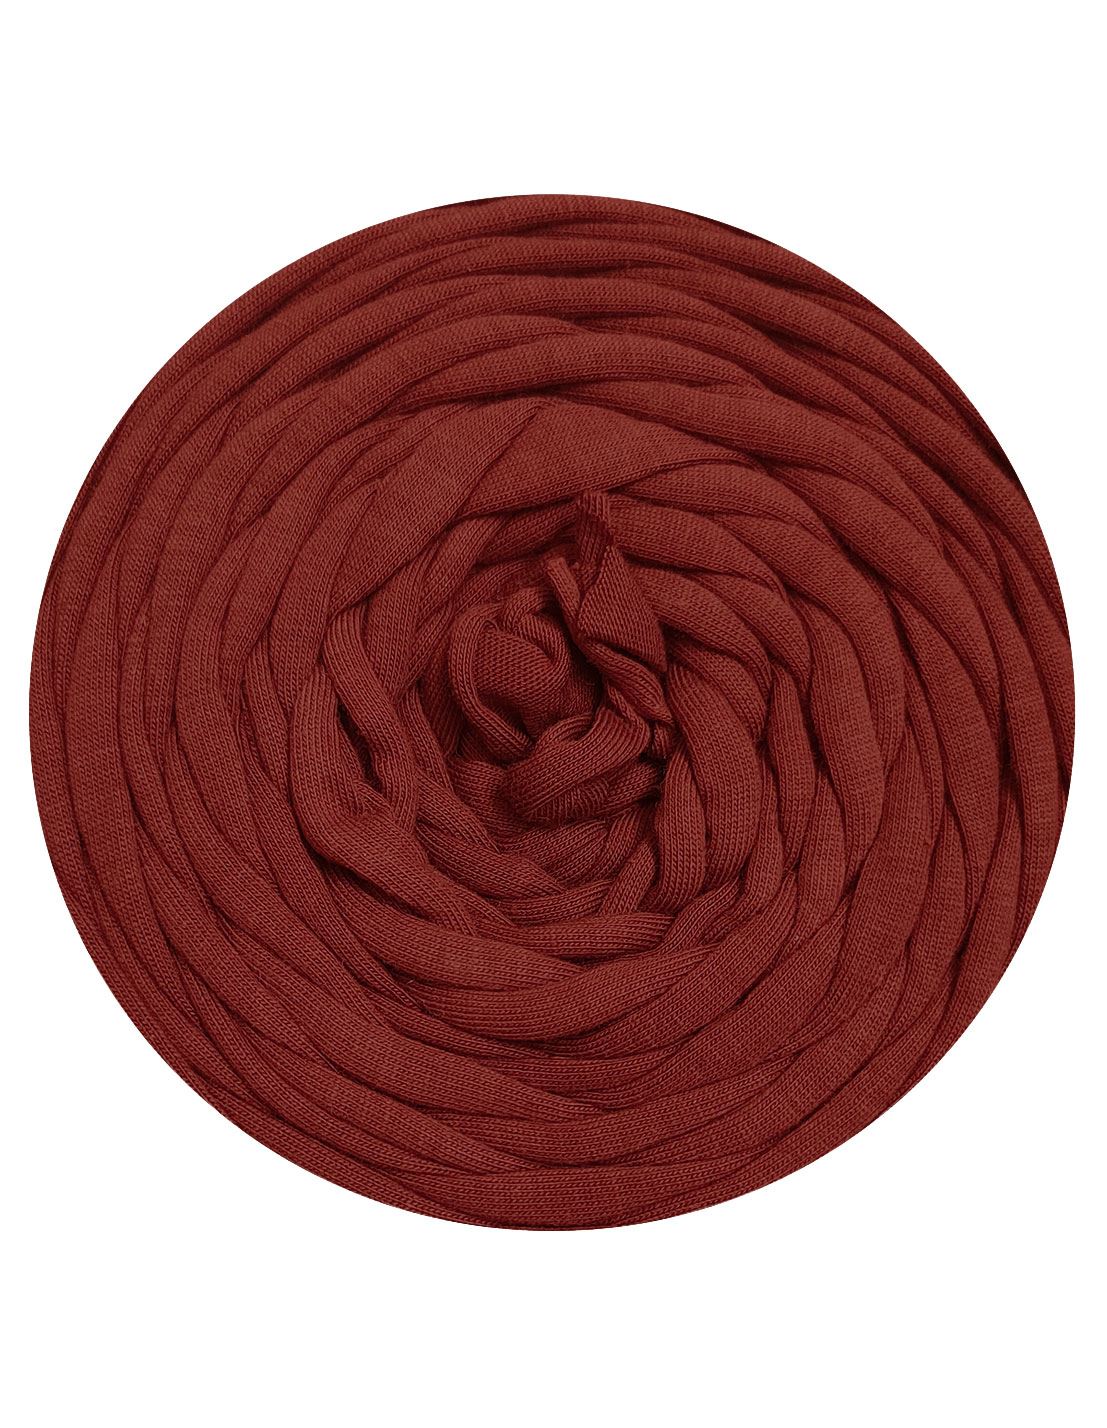 Deep cinnamon brown t-shirt yarn (100-120m)